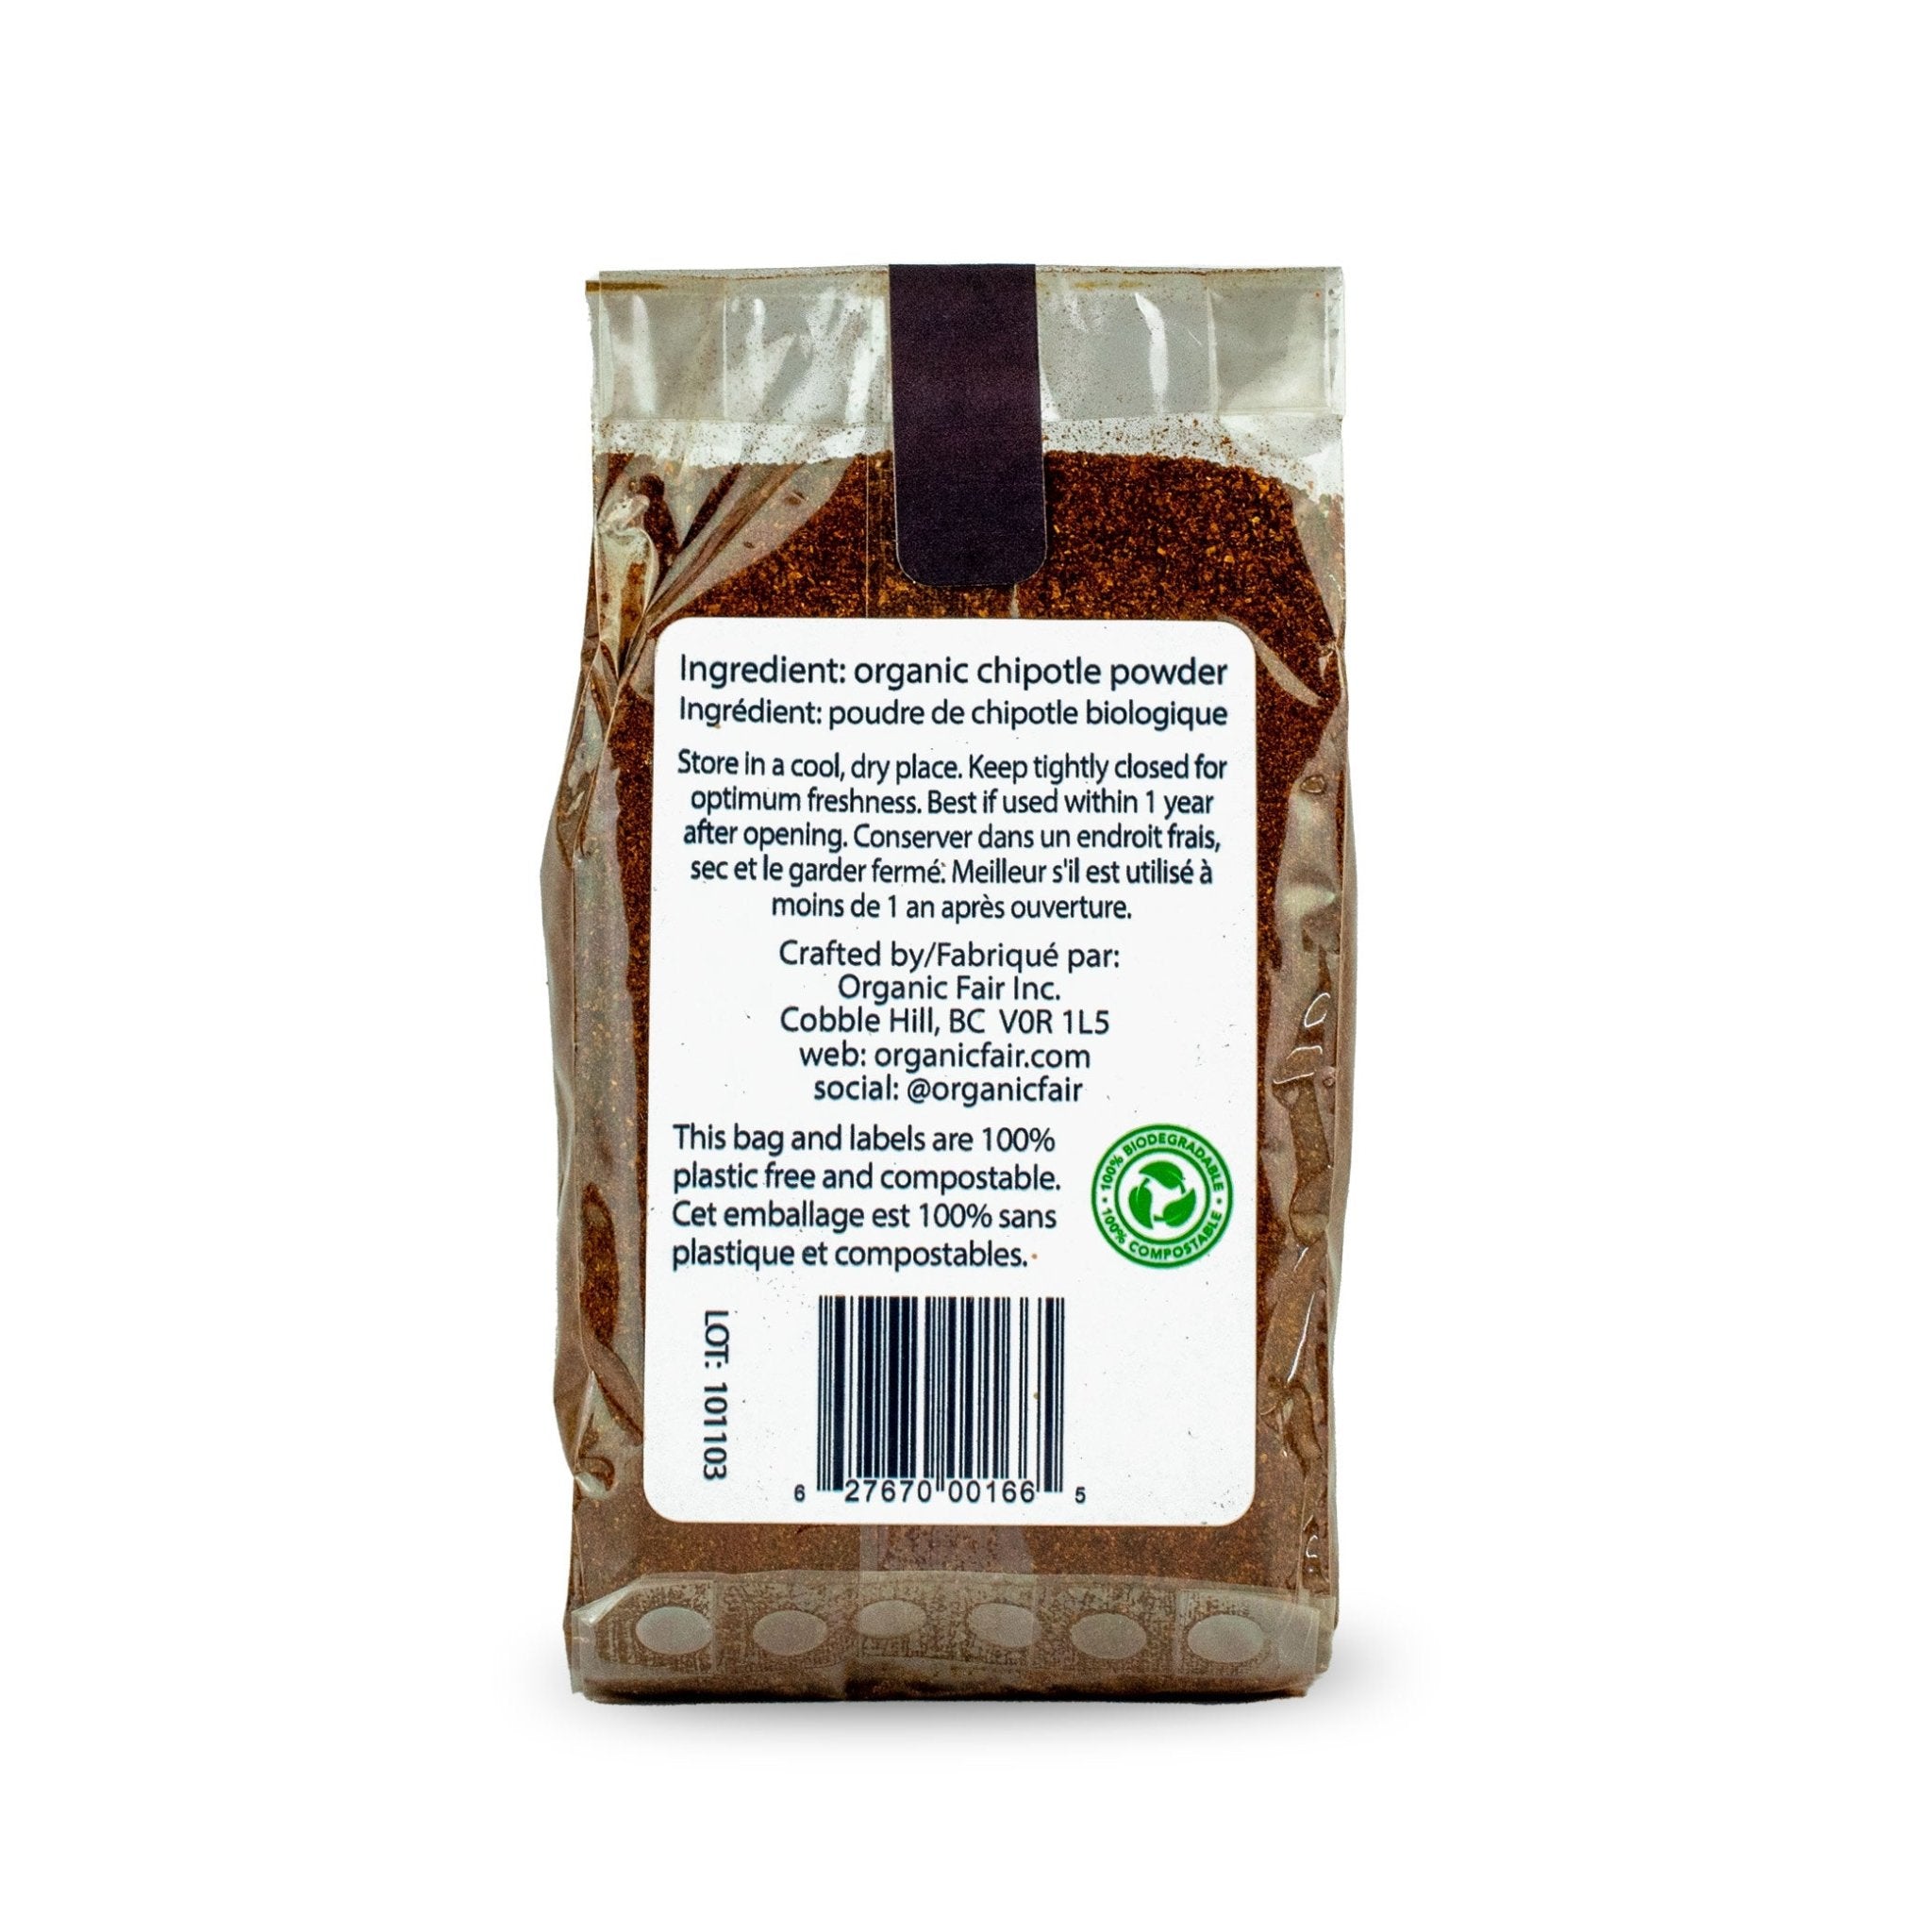 Chipotle Powder - Bag 120g - organicfair.com